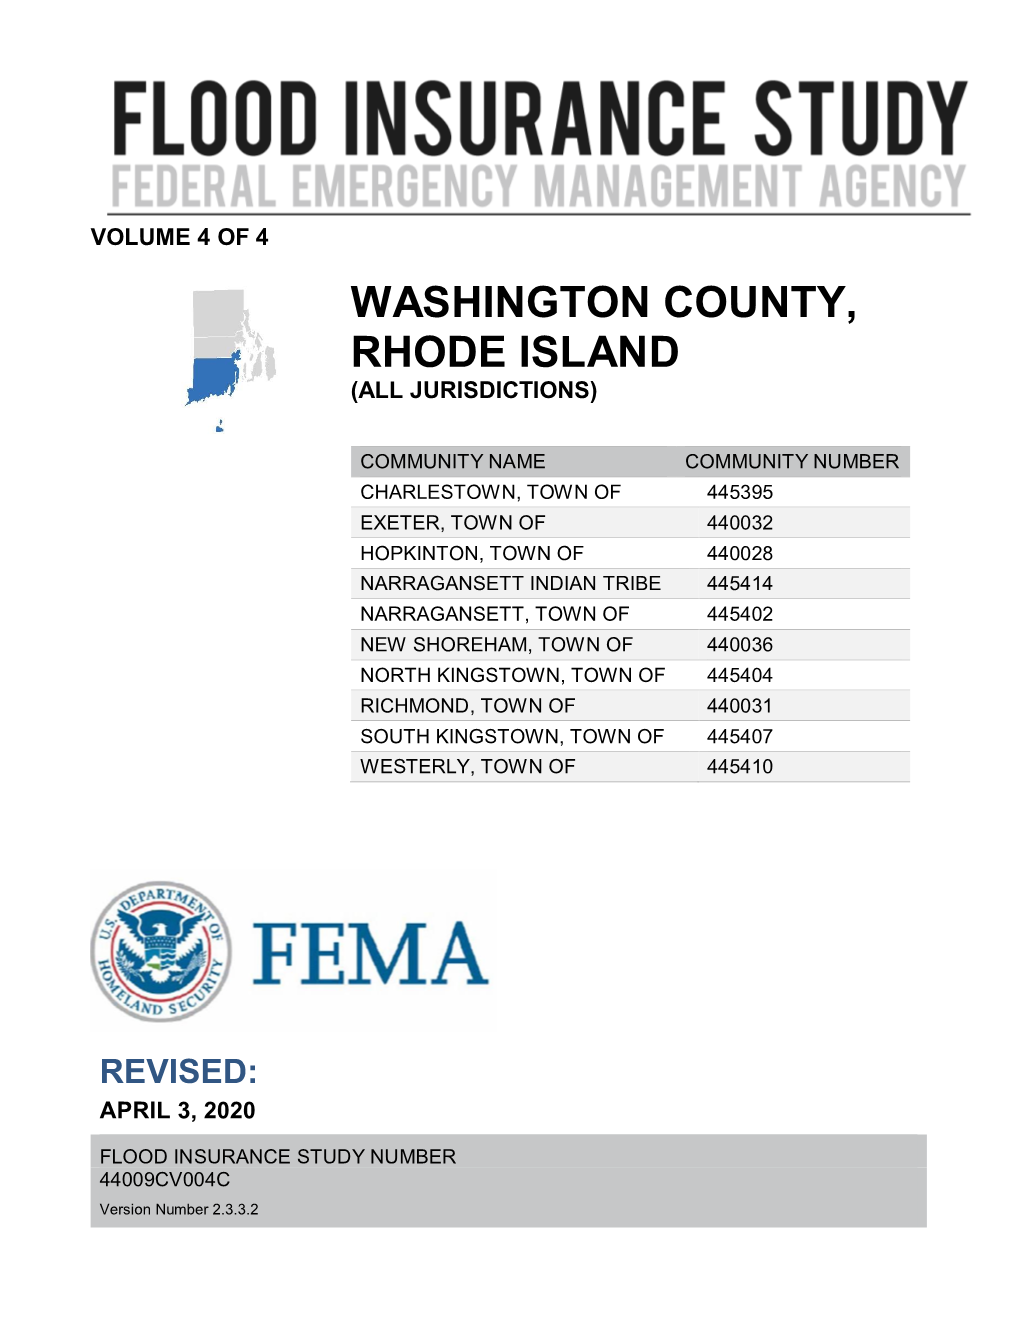 Washington County Flood Insurance Study Vol 4